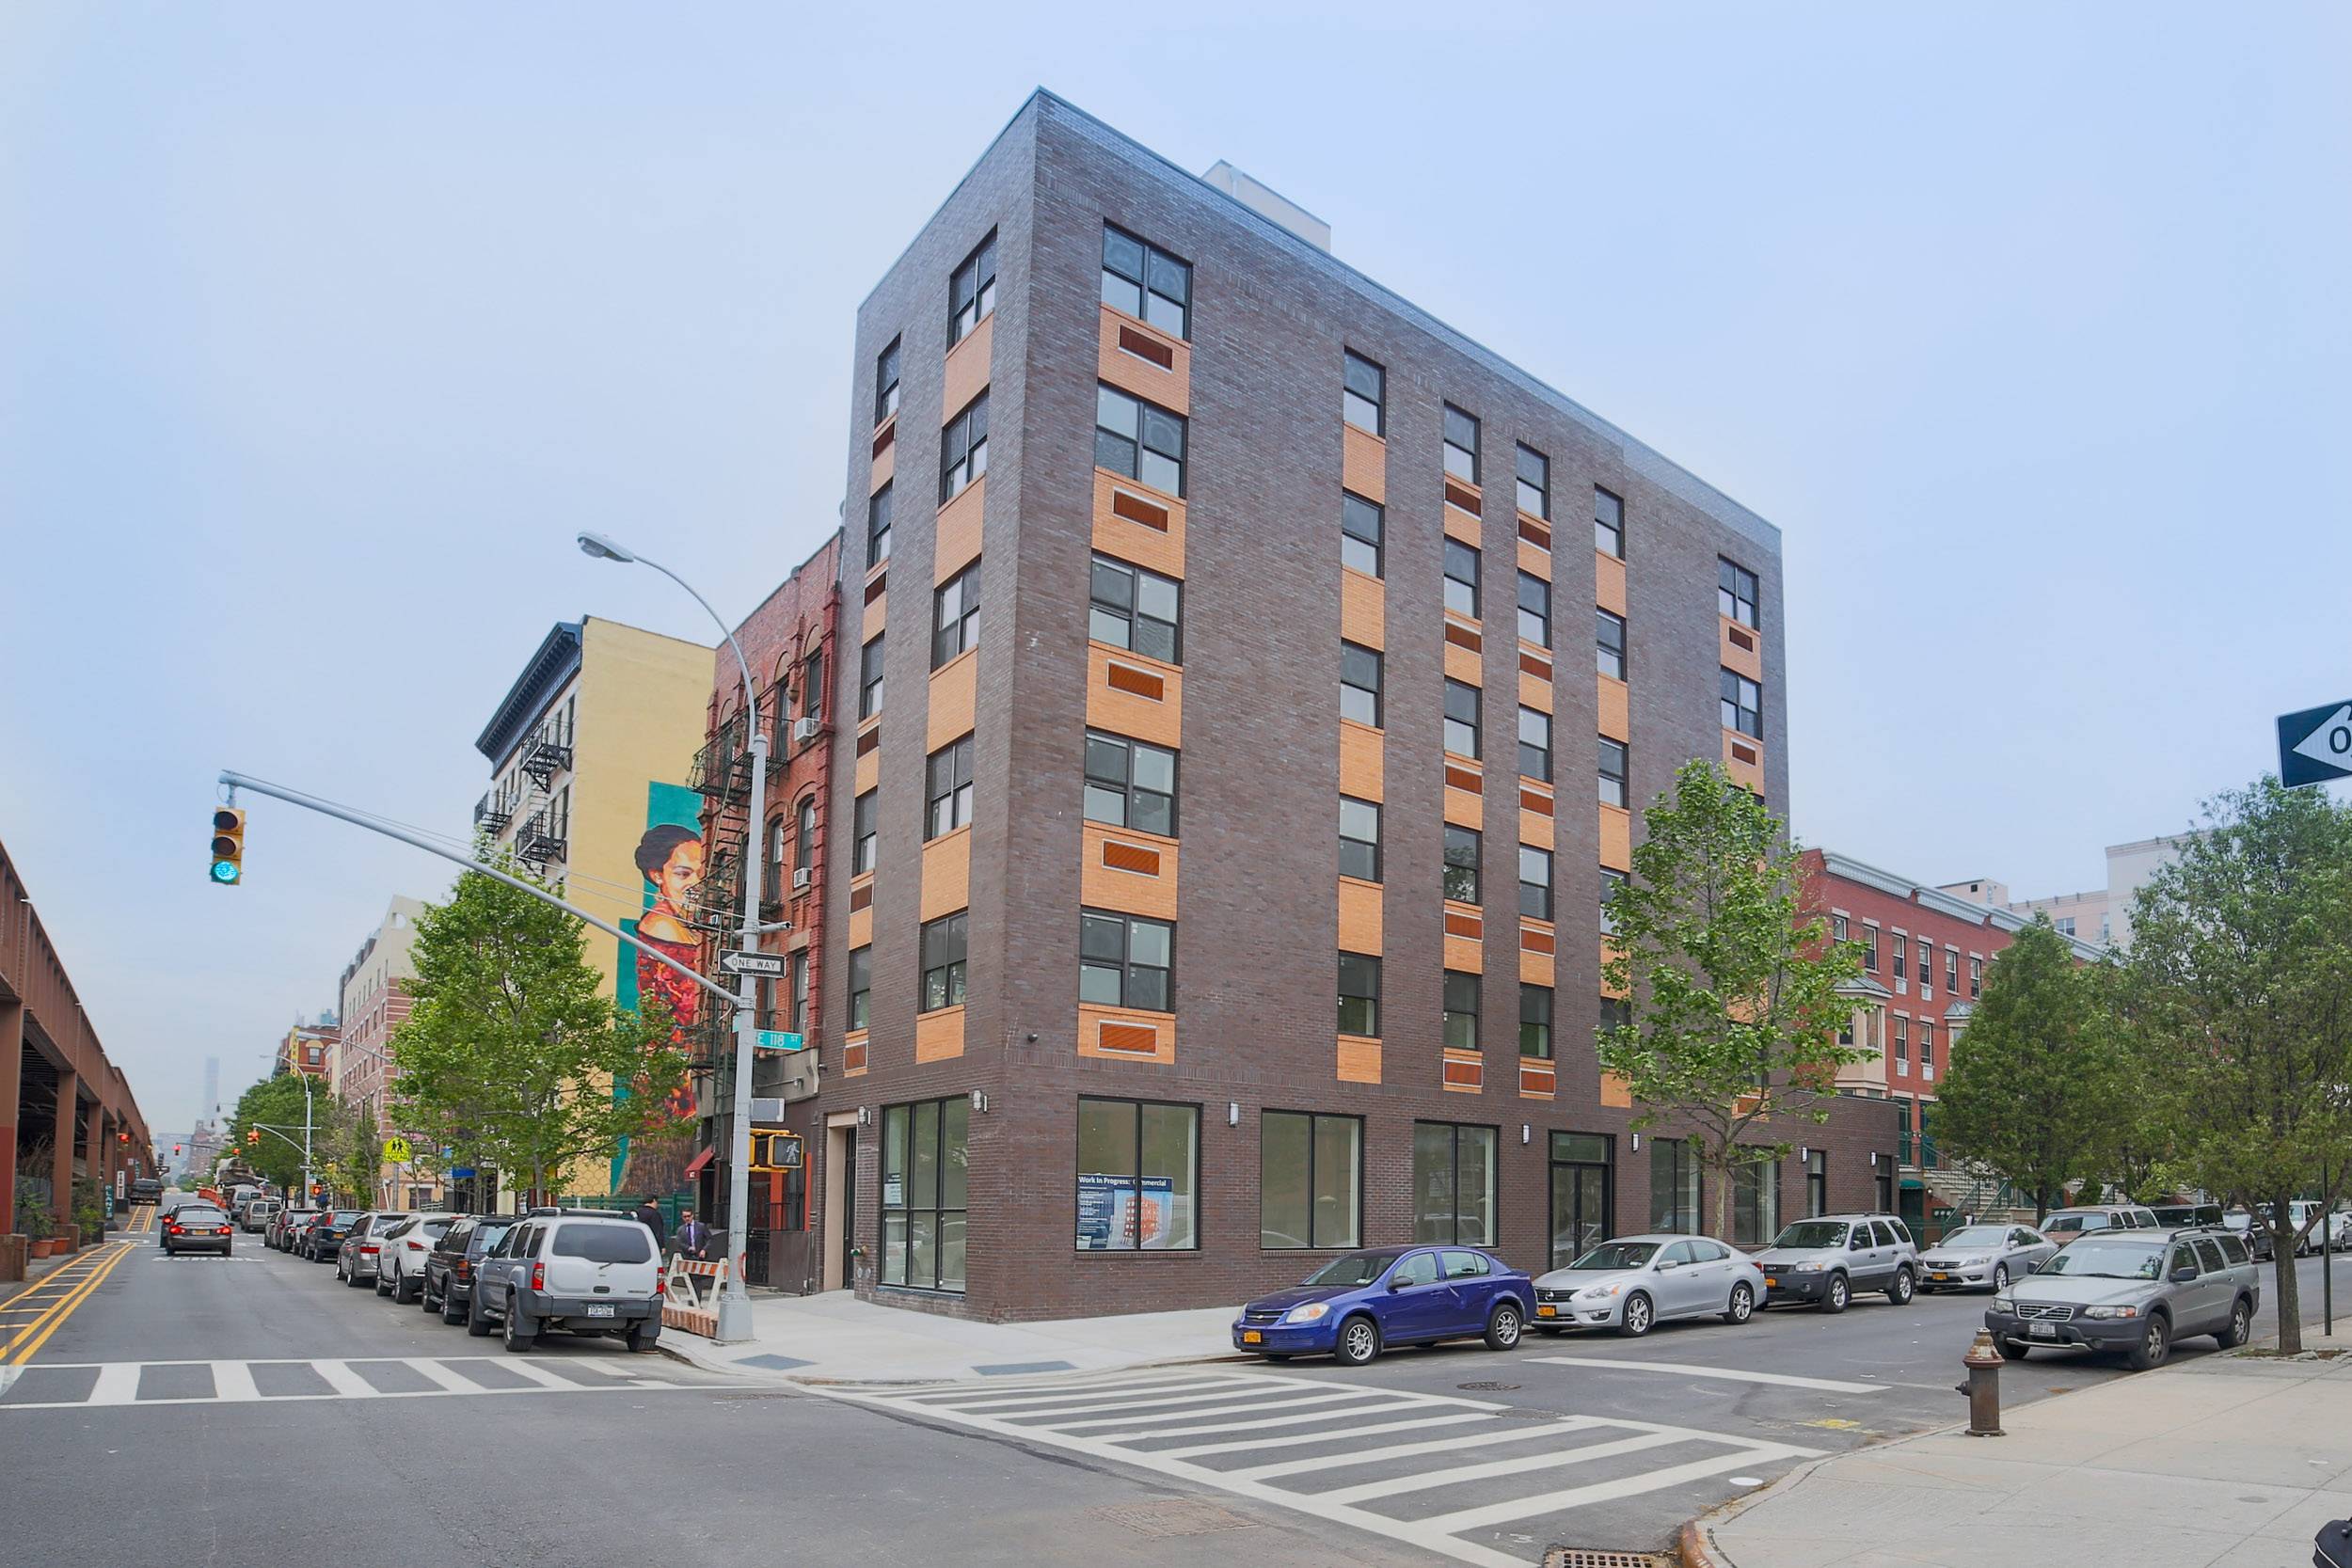 1674 Park Ave, Harlem, NY: 590 SQ FT Ground Floor Community Facilty For Rent